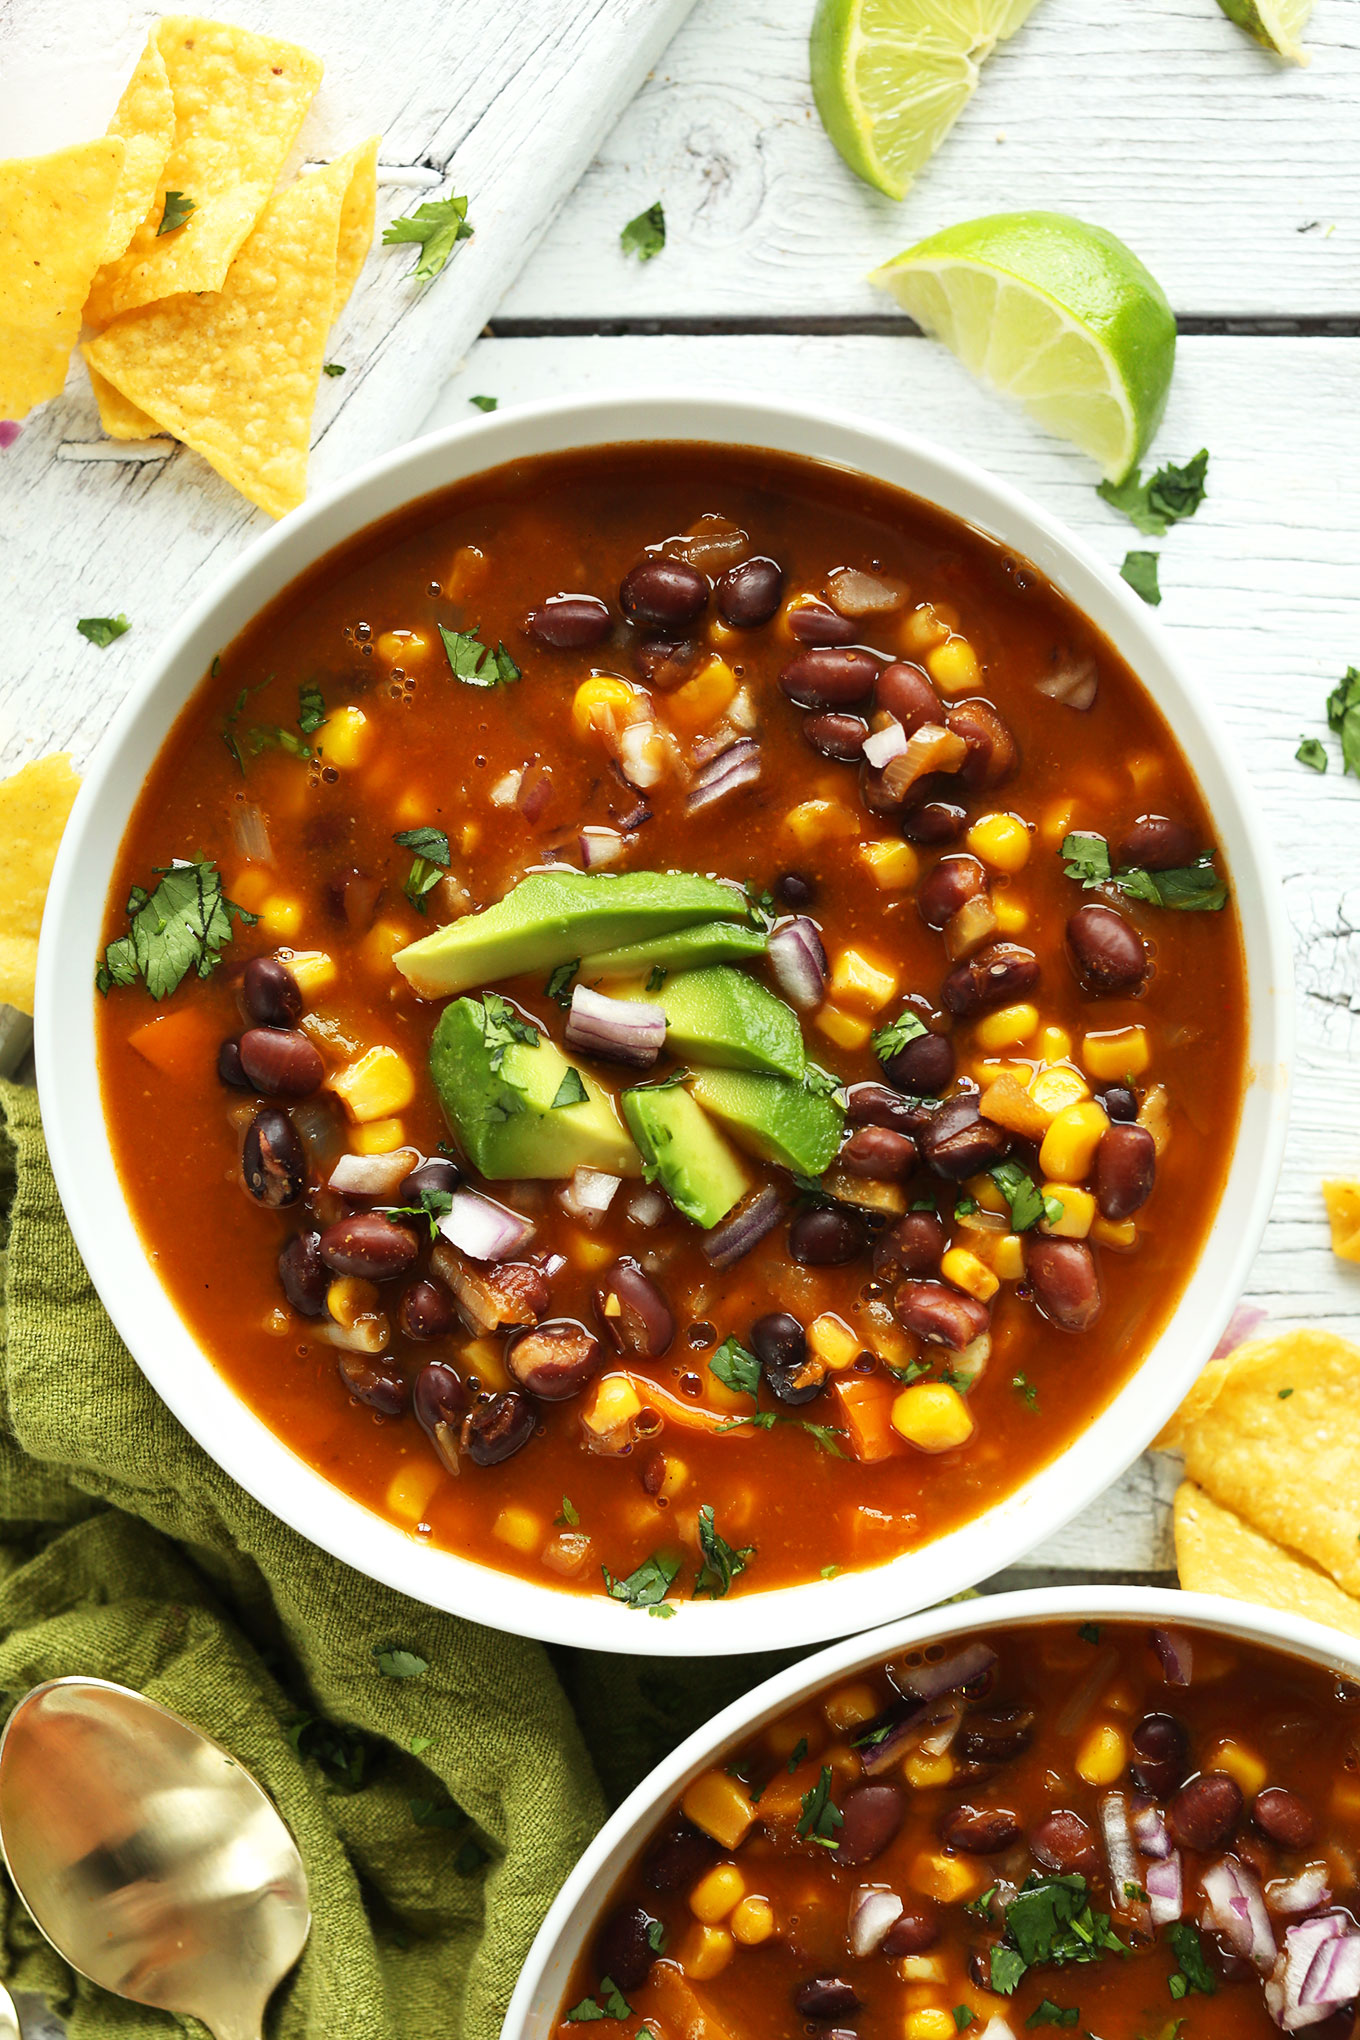 Bowl of healthy vegan Mexican Chipotle Black Bean Tortilla Soup